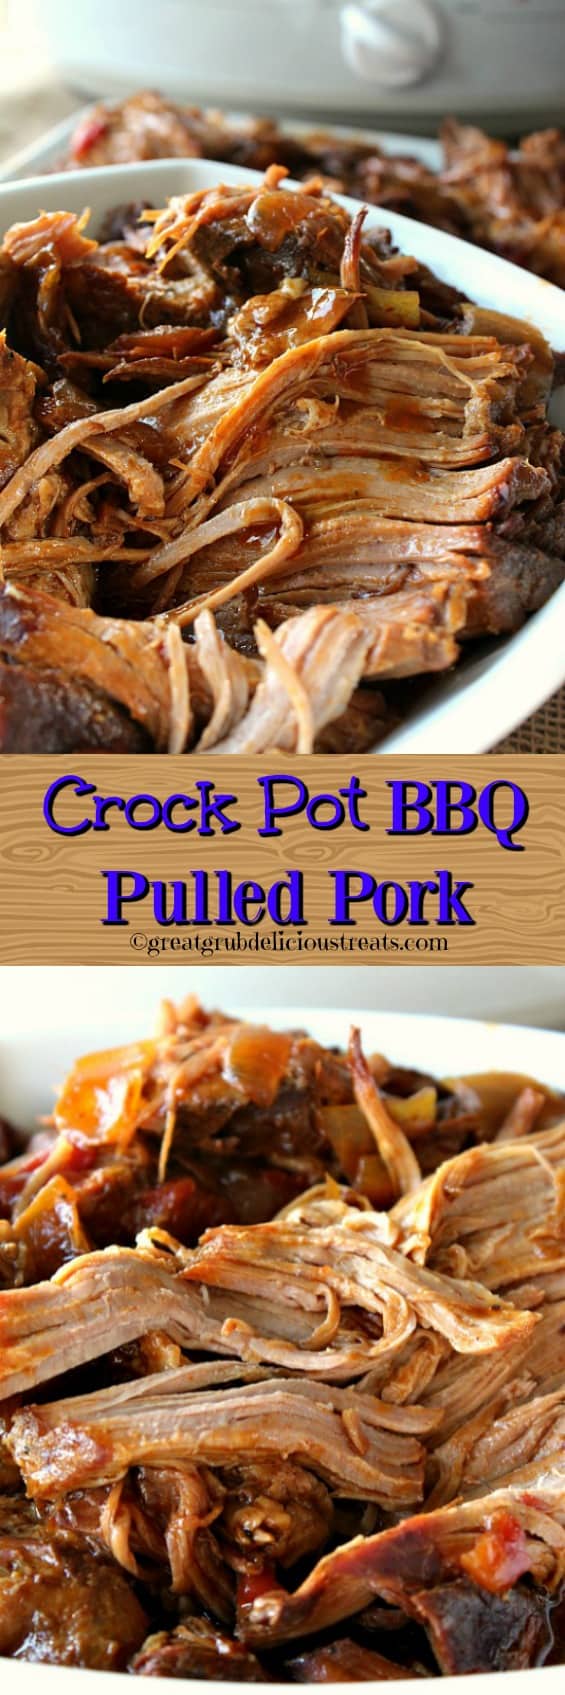 Crock Pot BBQ Pulled Pork